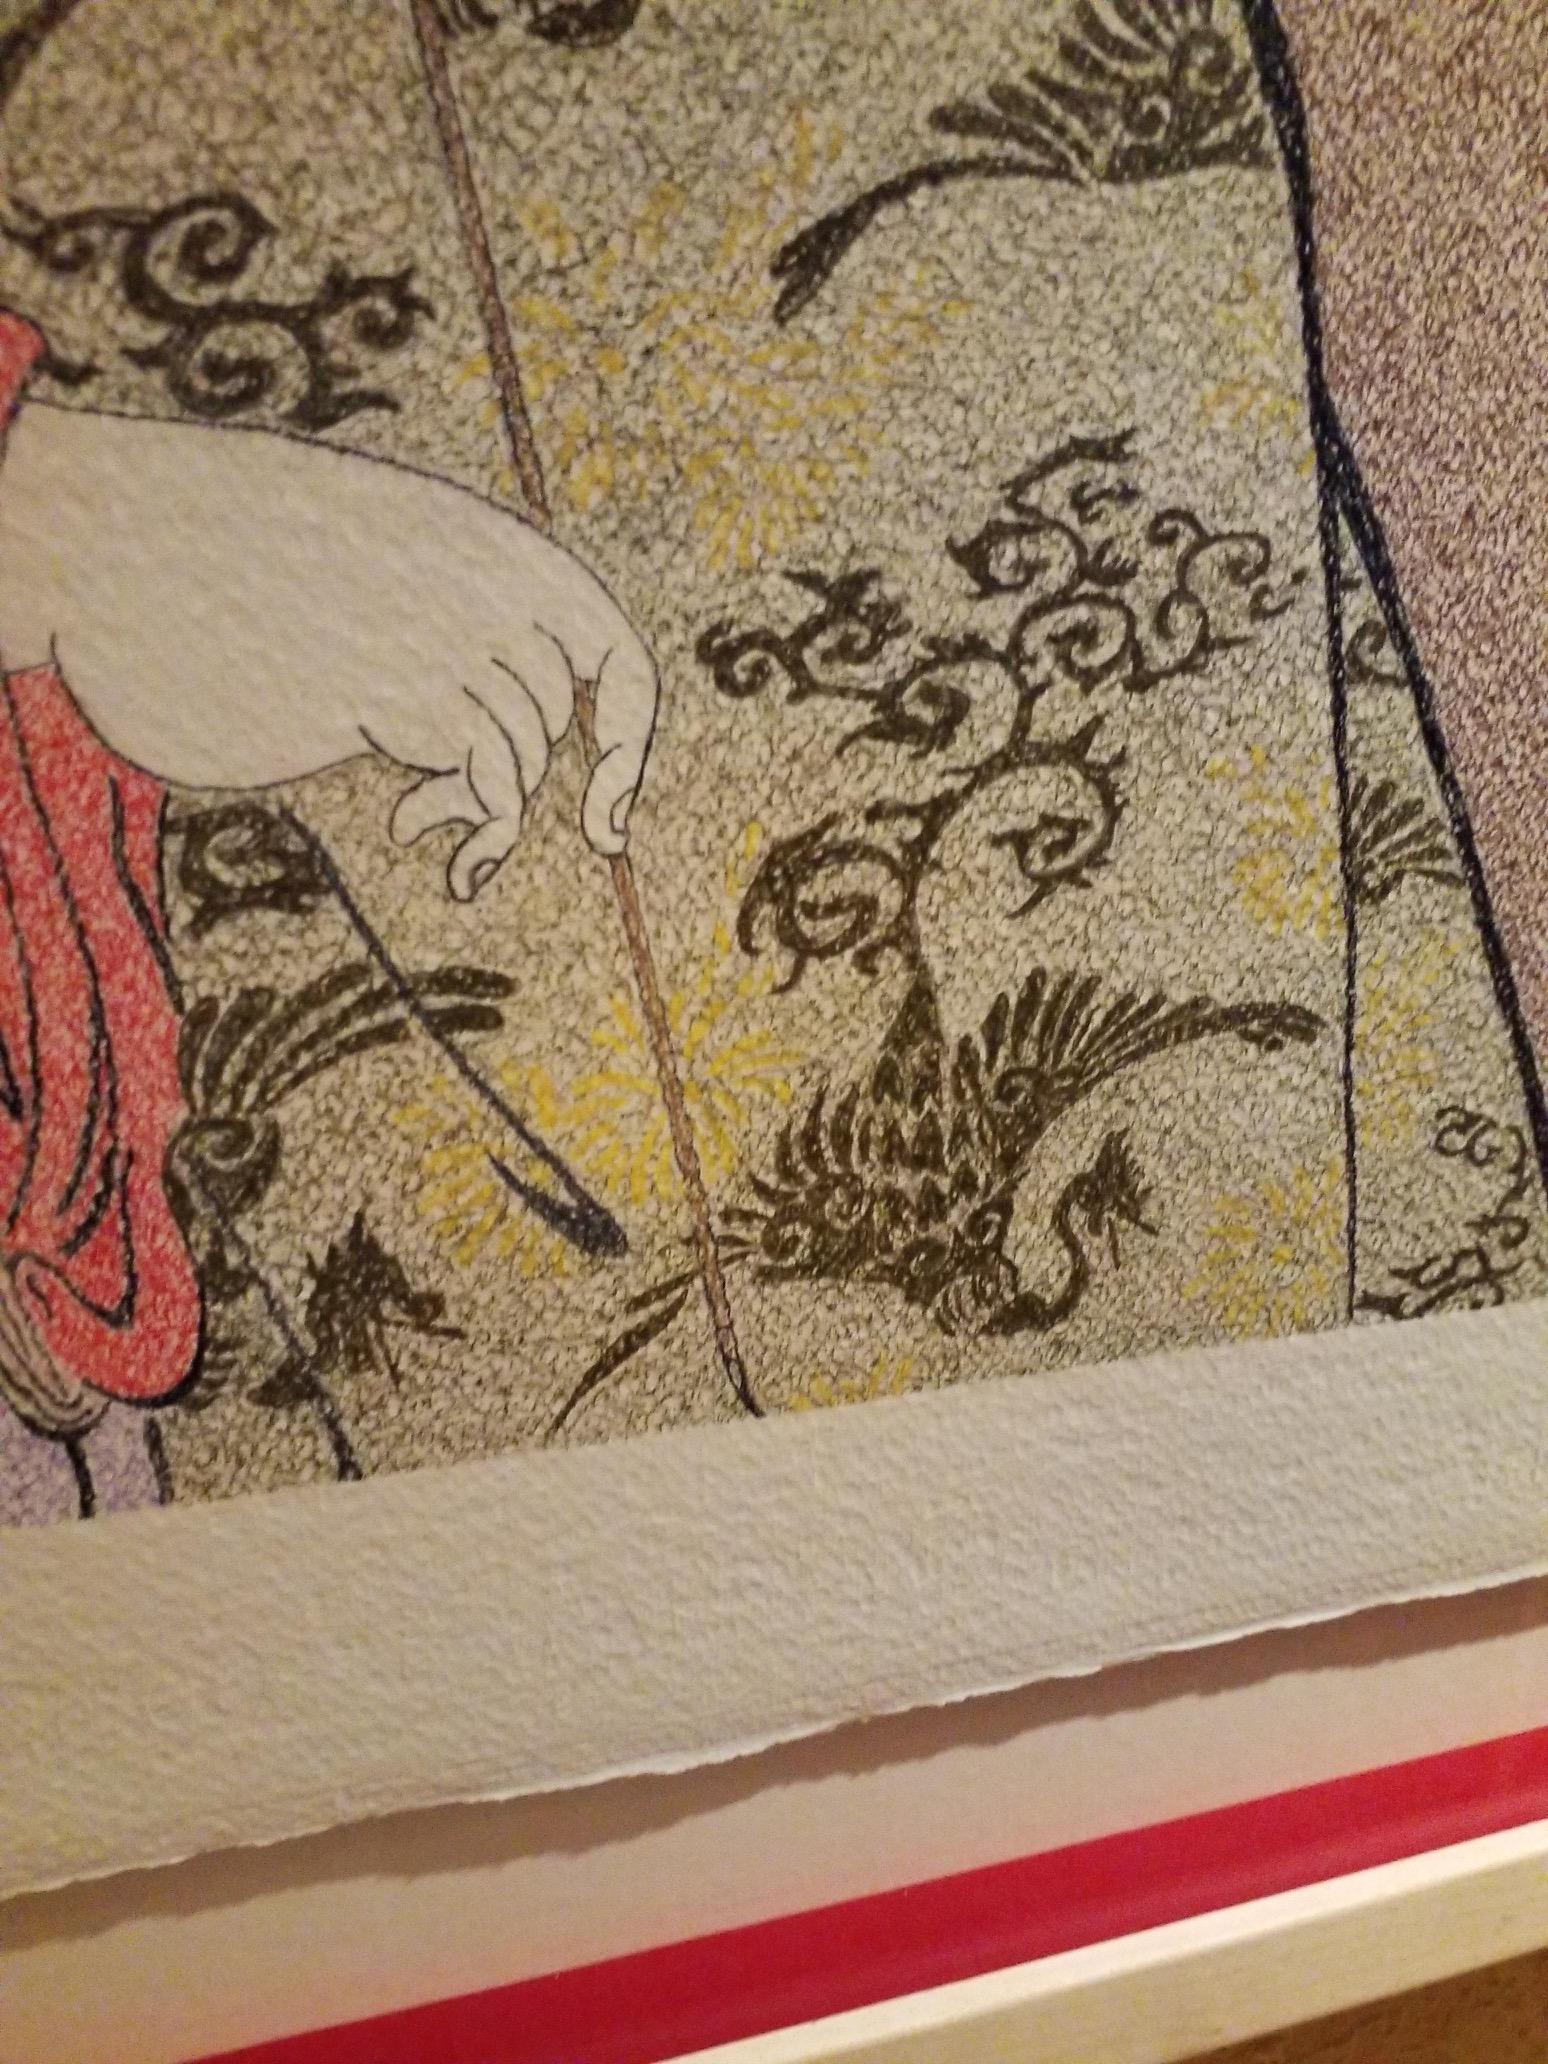 Bijin-ga Series XXVI (Nº 26)

Title: Hanaôgi of the Ôgiya House

Hanaôgi, one of the most famous courtesans of the Edo period working in the Ôgiya House, an exclusive brothel in the Yoshiwara appears beautifully dressed holding a writing brush on